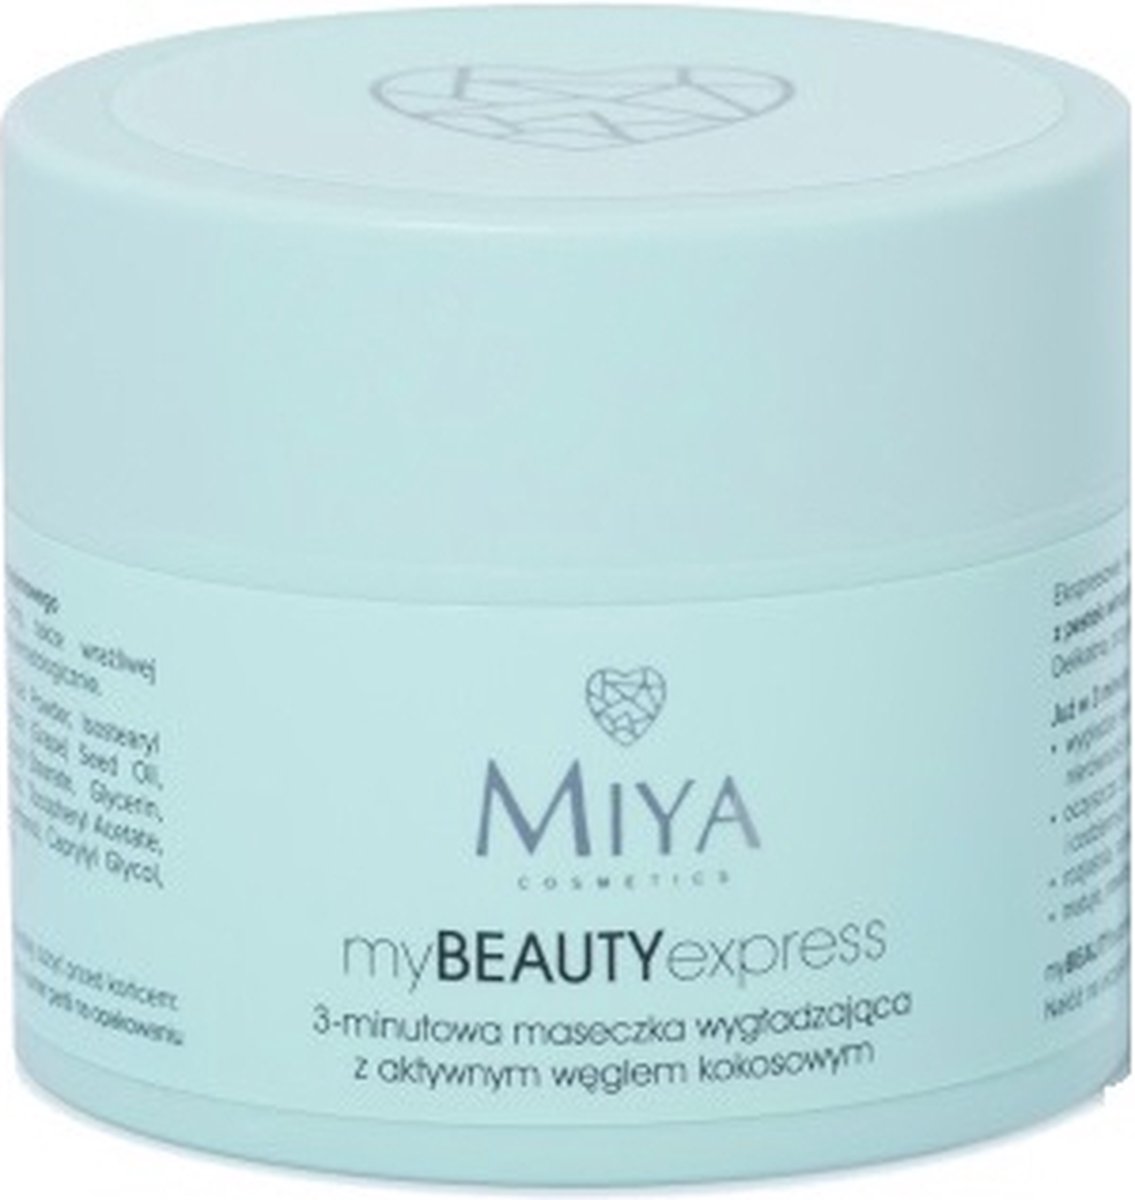 Miya - My Beauty Express 3-Minute Smoothing Mask 50G